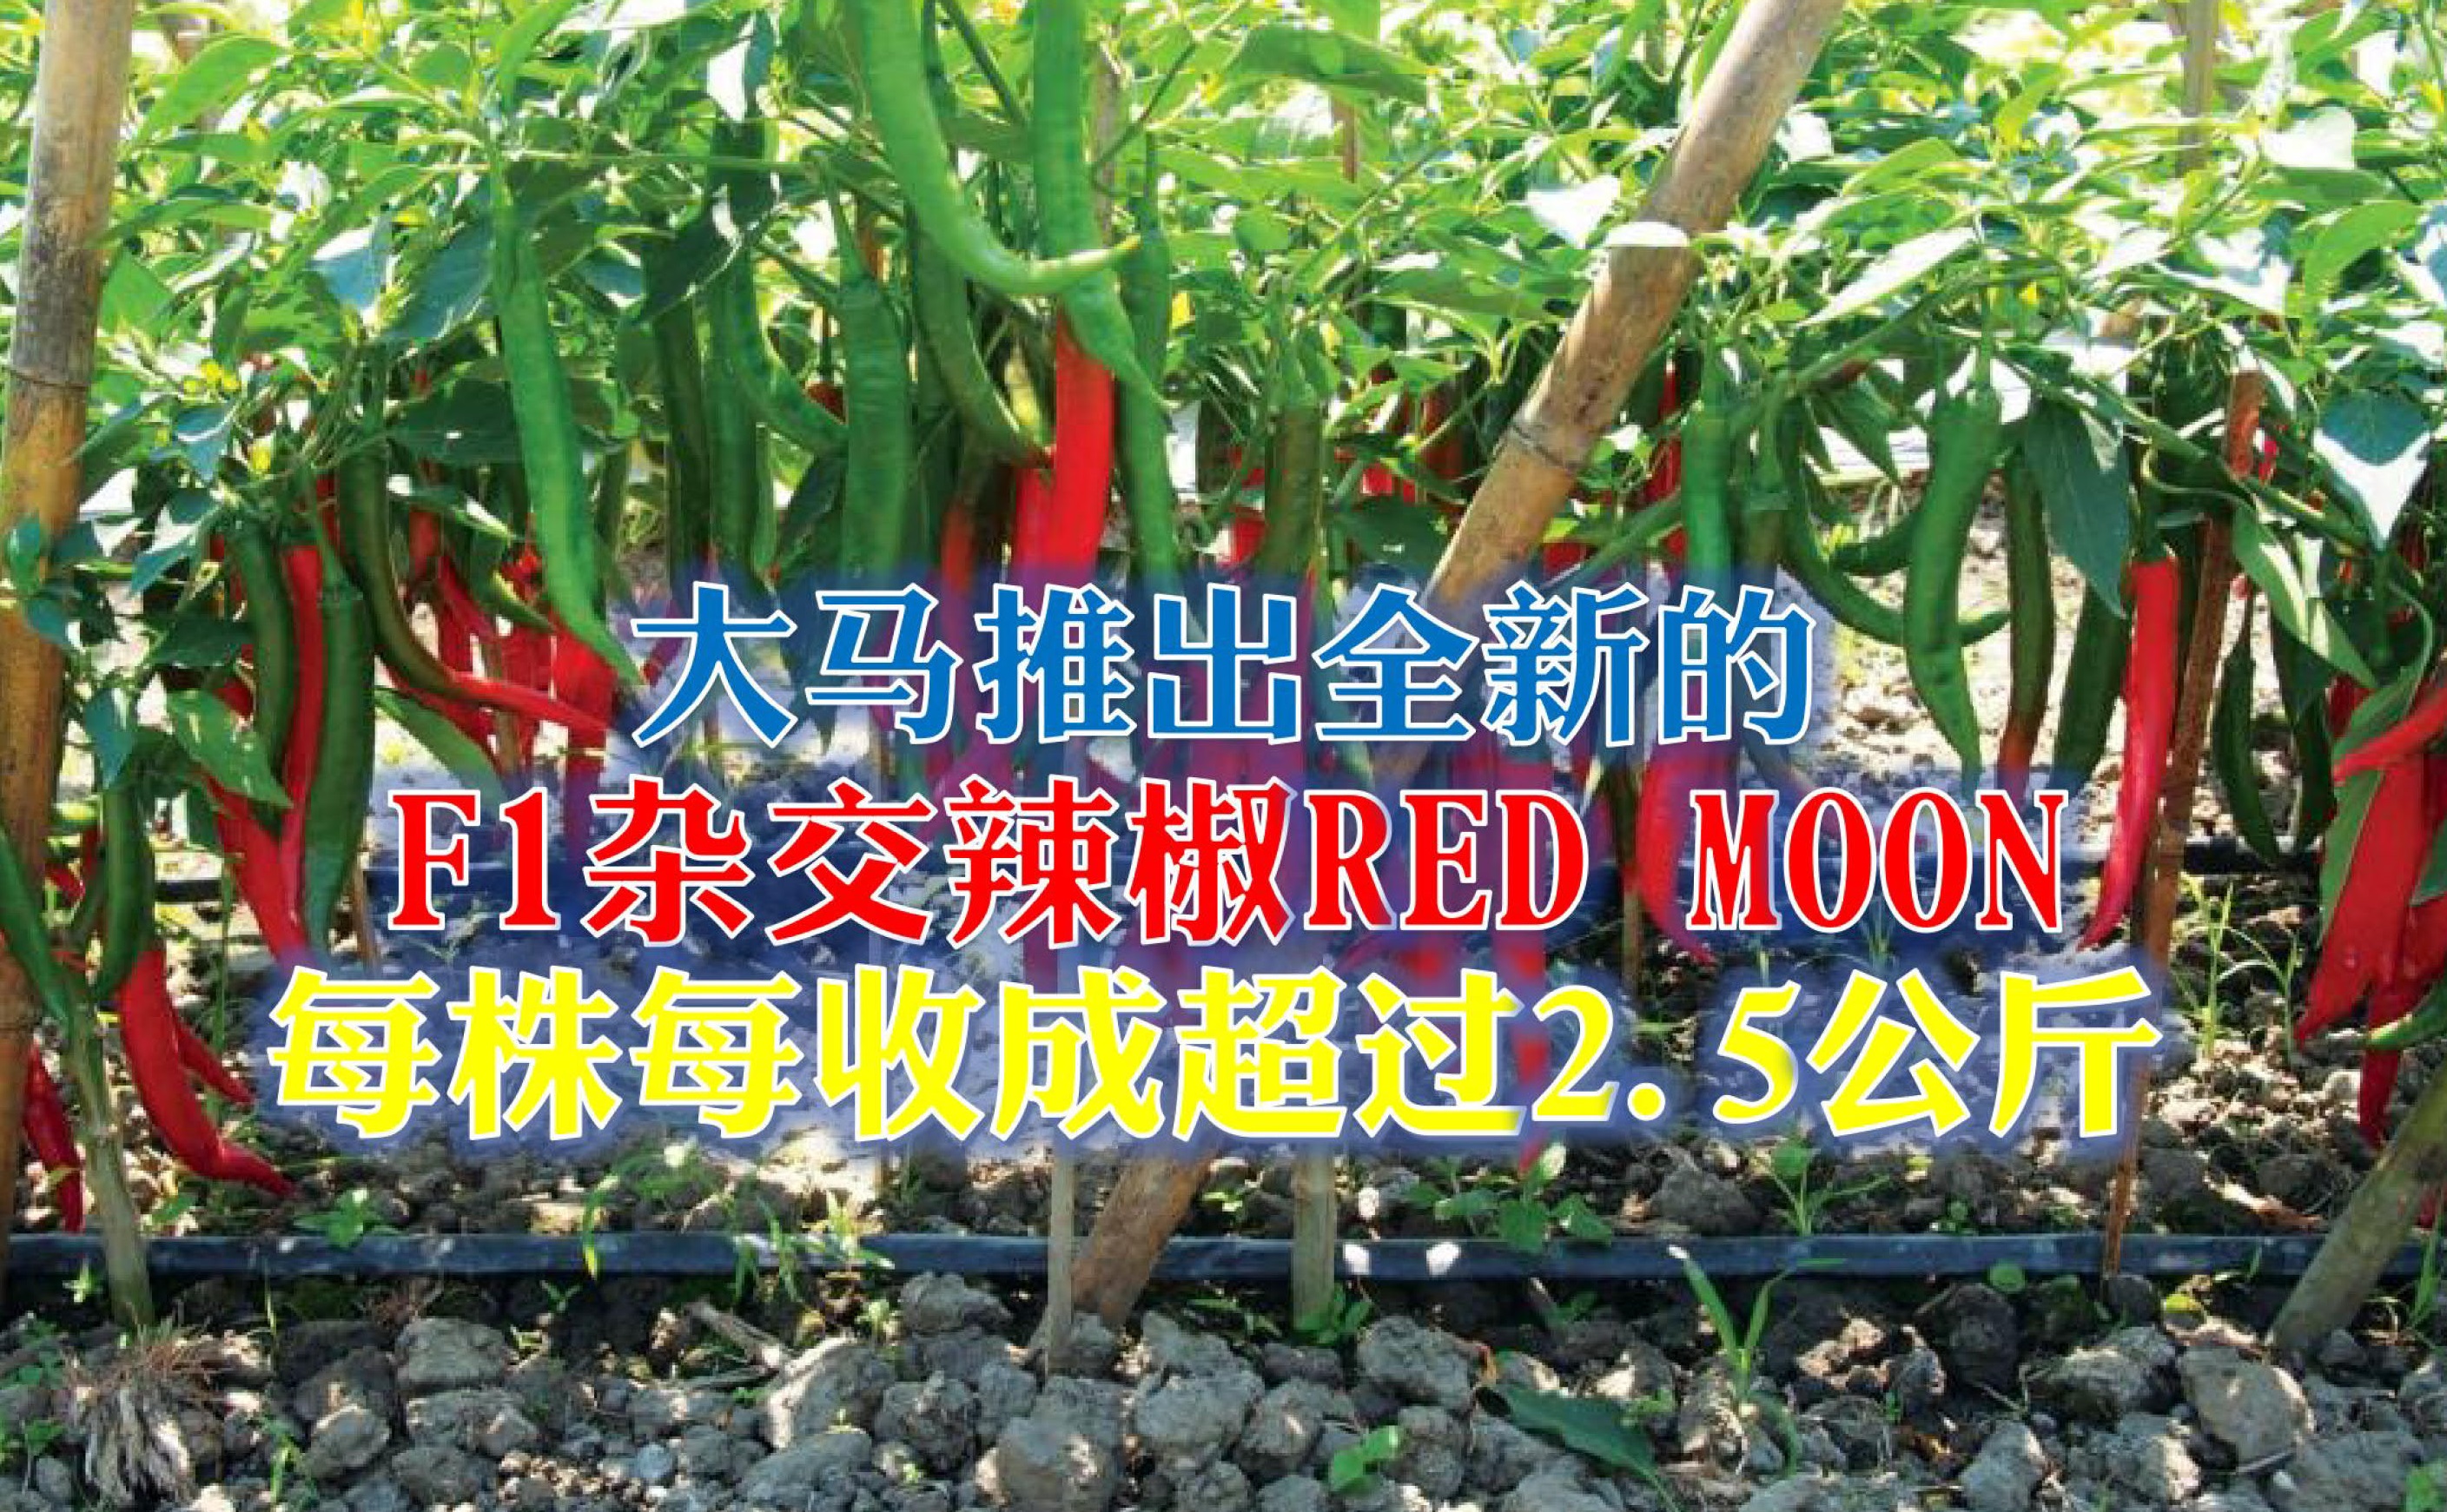 Kenso全新F1杂交辣椒 Red Moon具备诸多种植优势 - 农牧世界